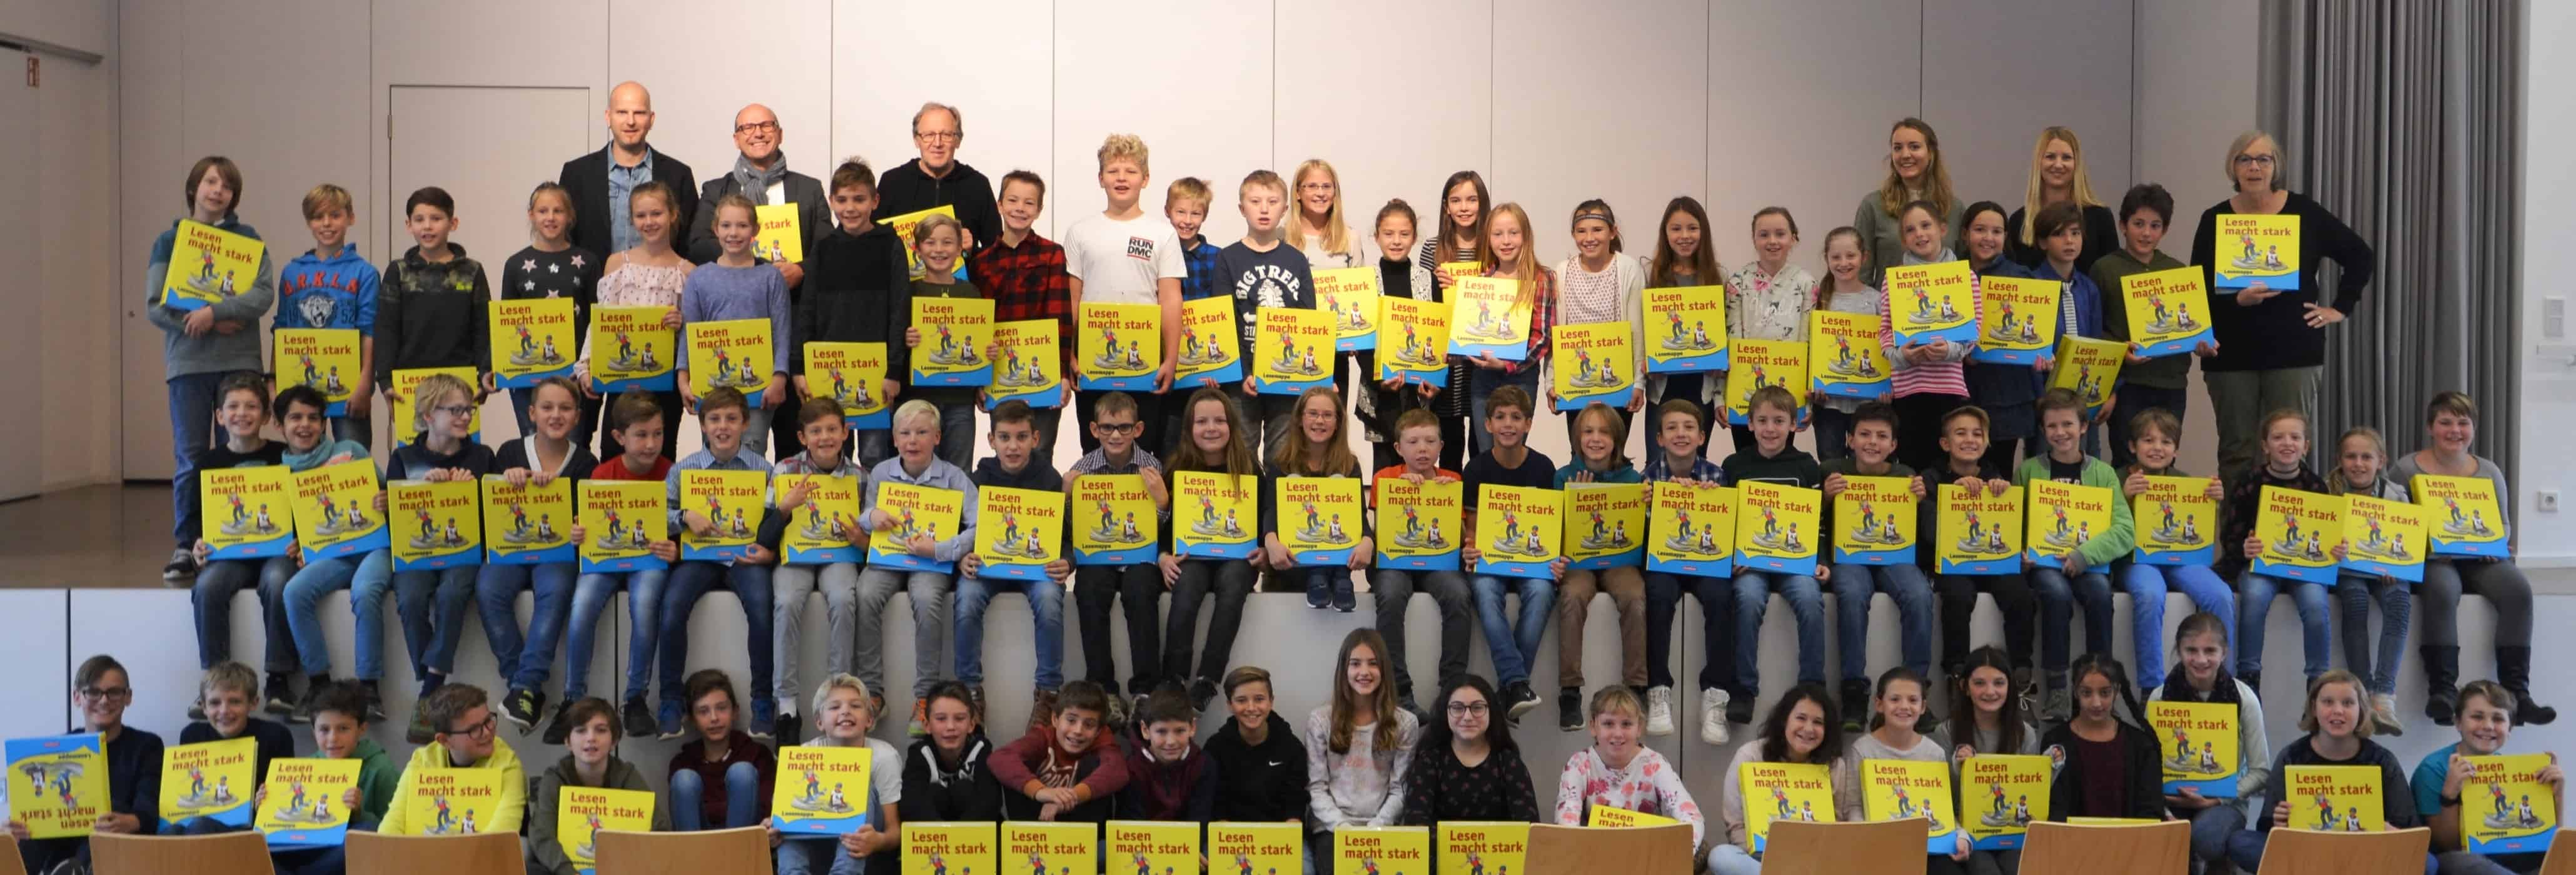 Lesen macht stark – Projektstart am Schulzentrum Kißlegg